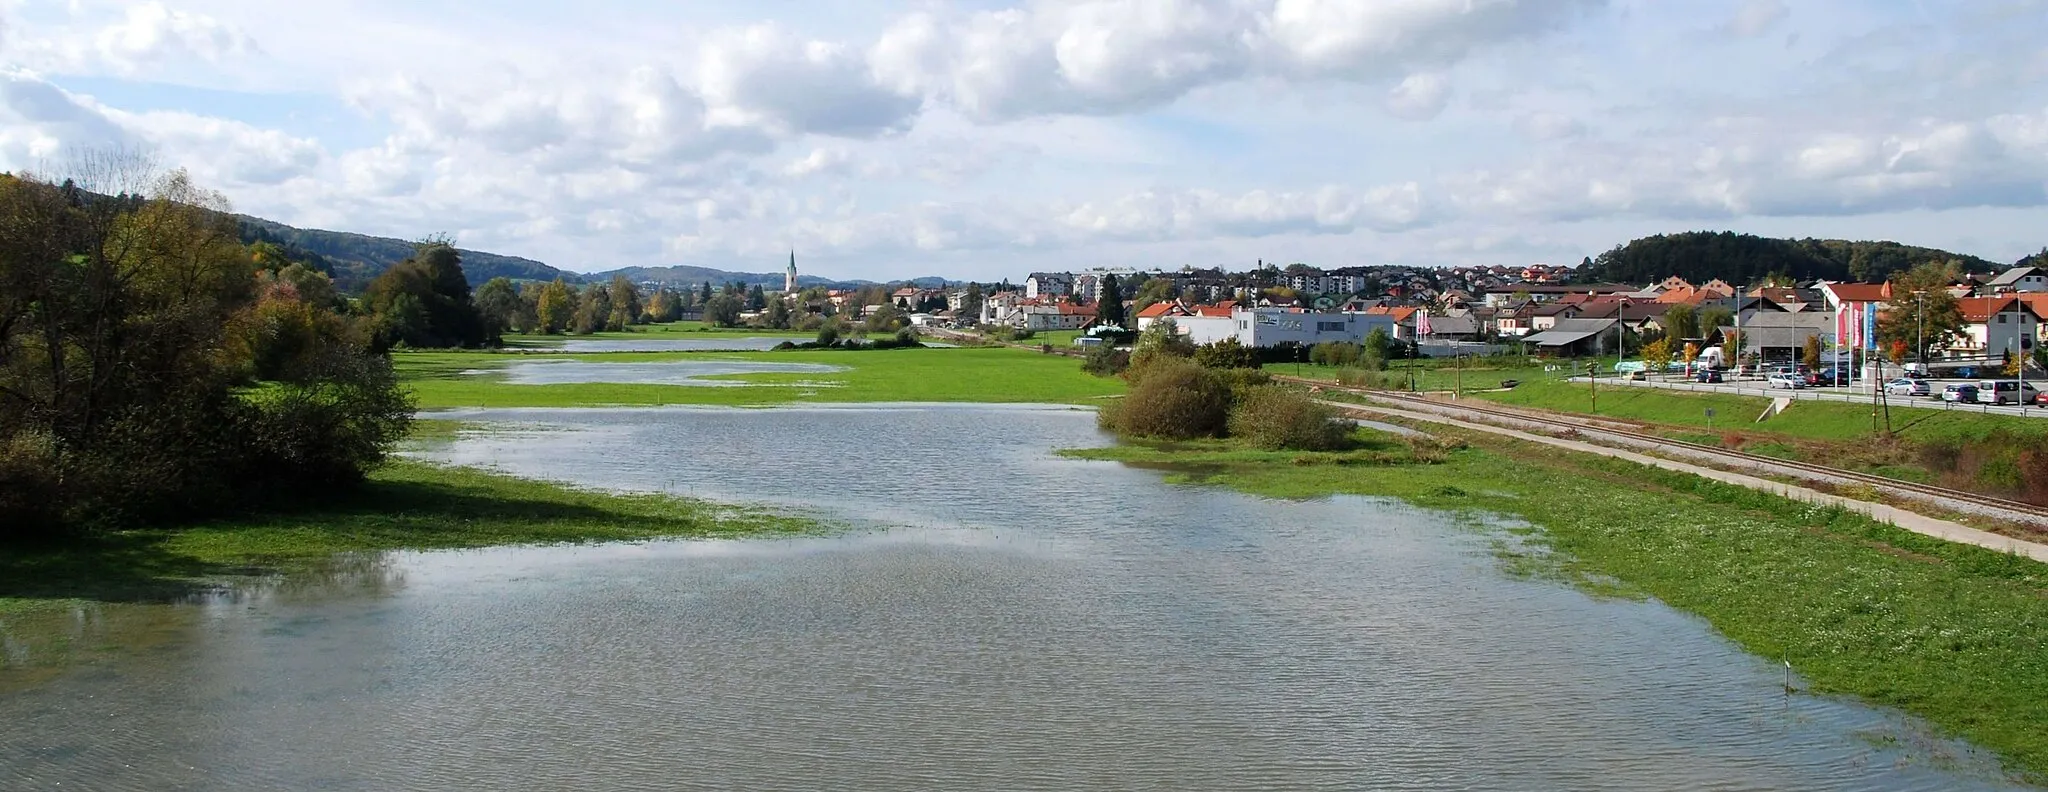 Photo showing: The Temenica floodplain next to Trebnje (Slovenia) after rain.